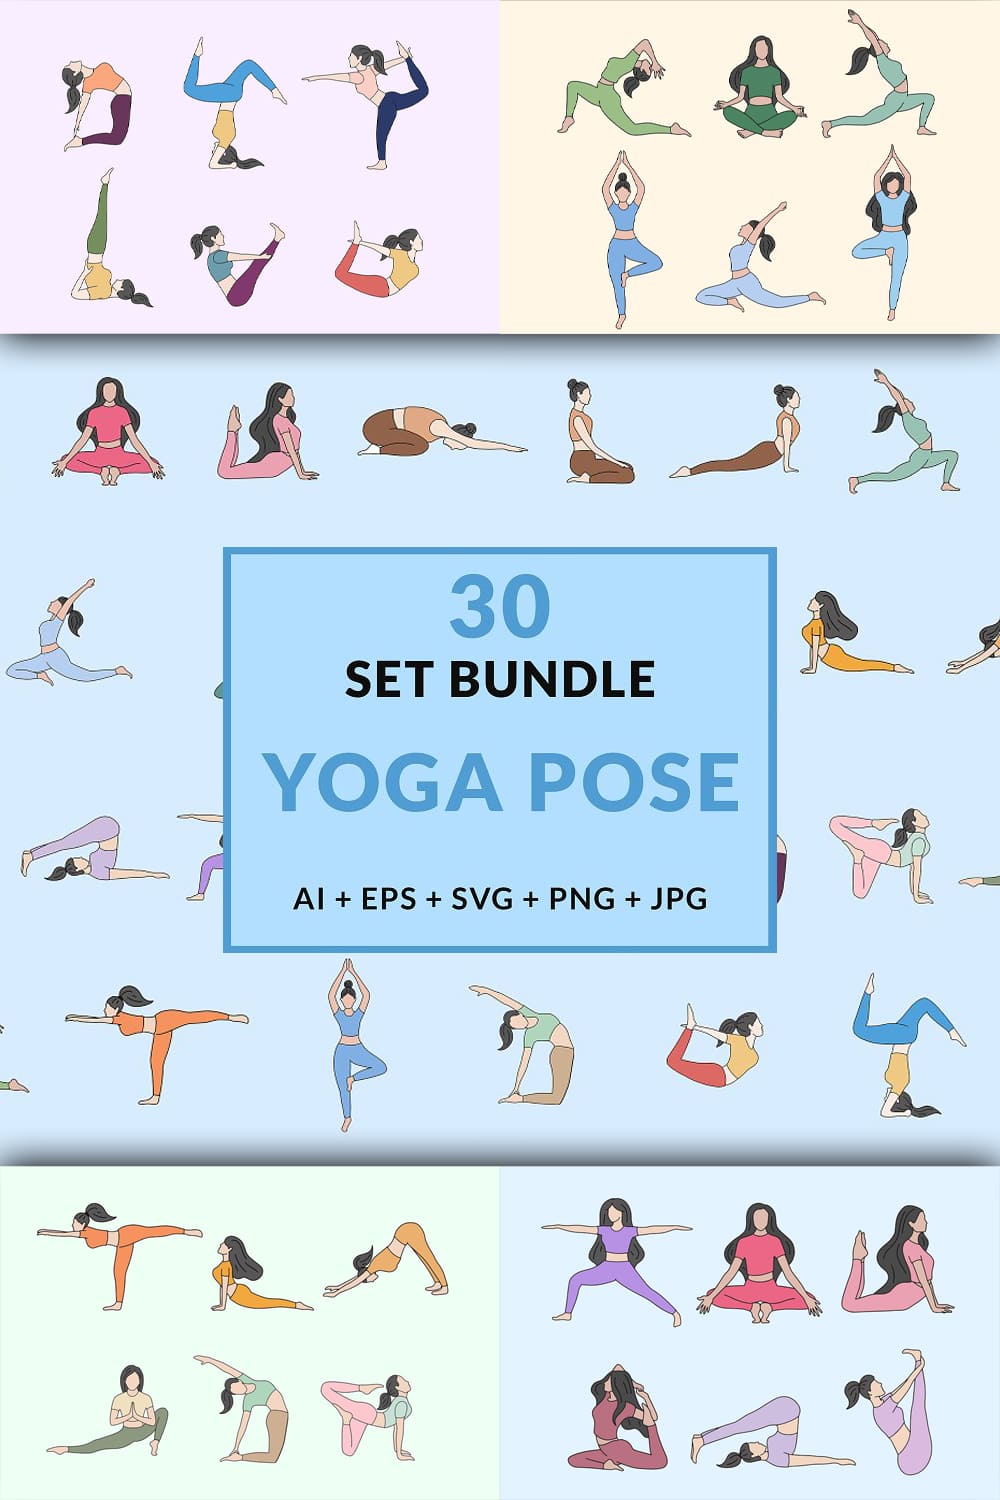 30 bundle women yoga pose wellness - pinterest image preview.